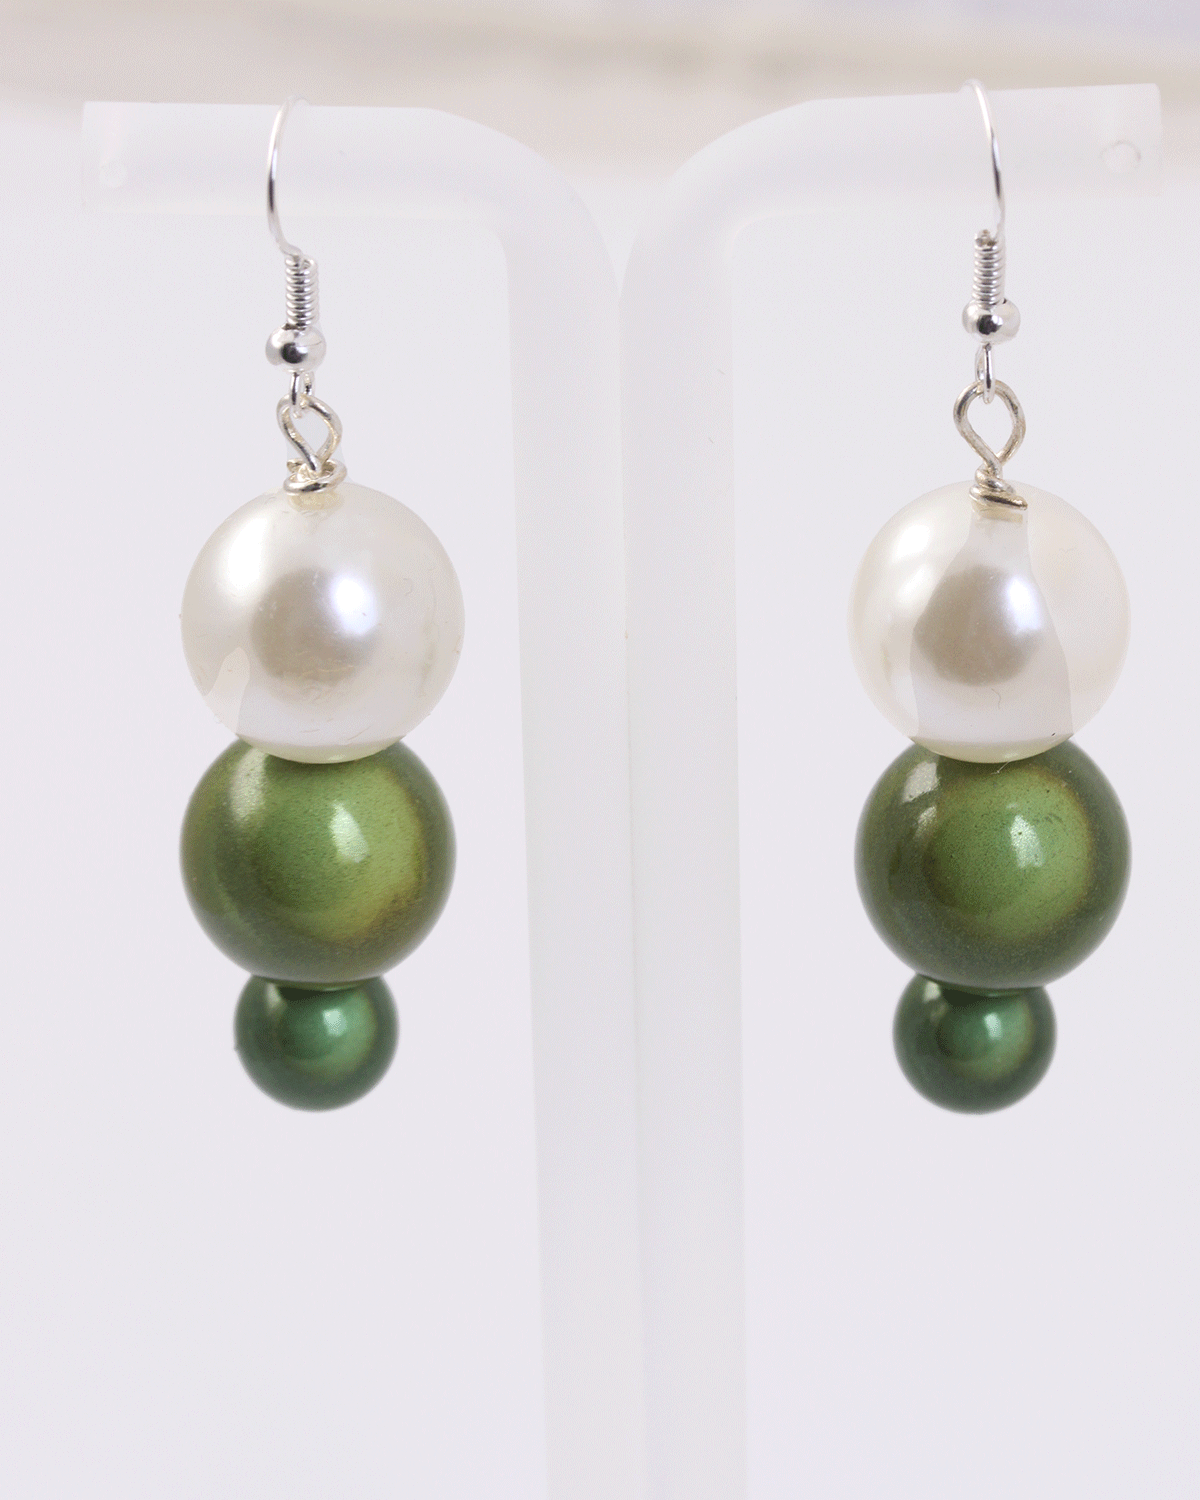 3 ball green and pearl earrings